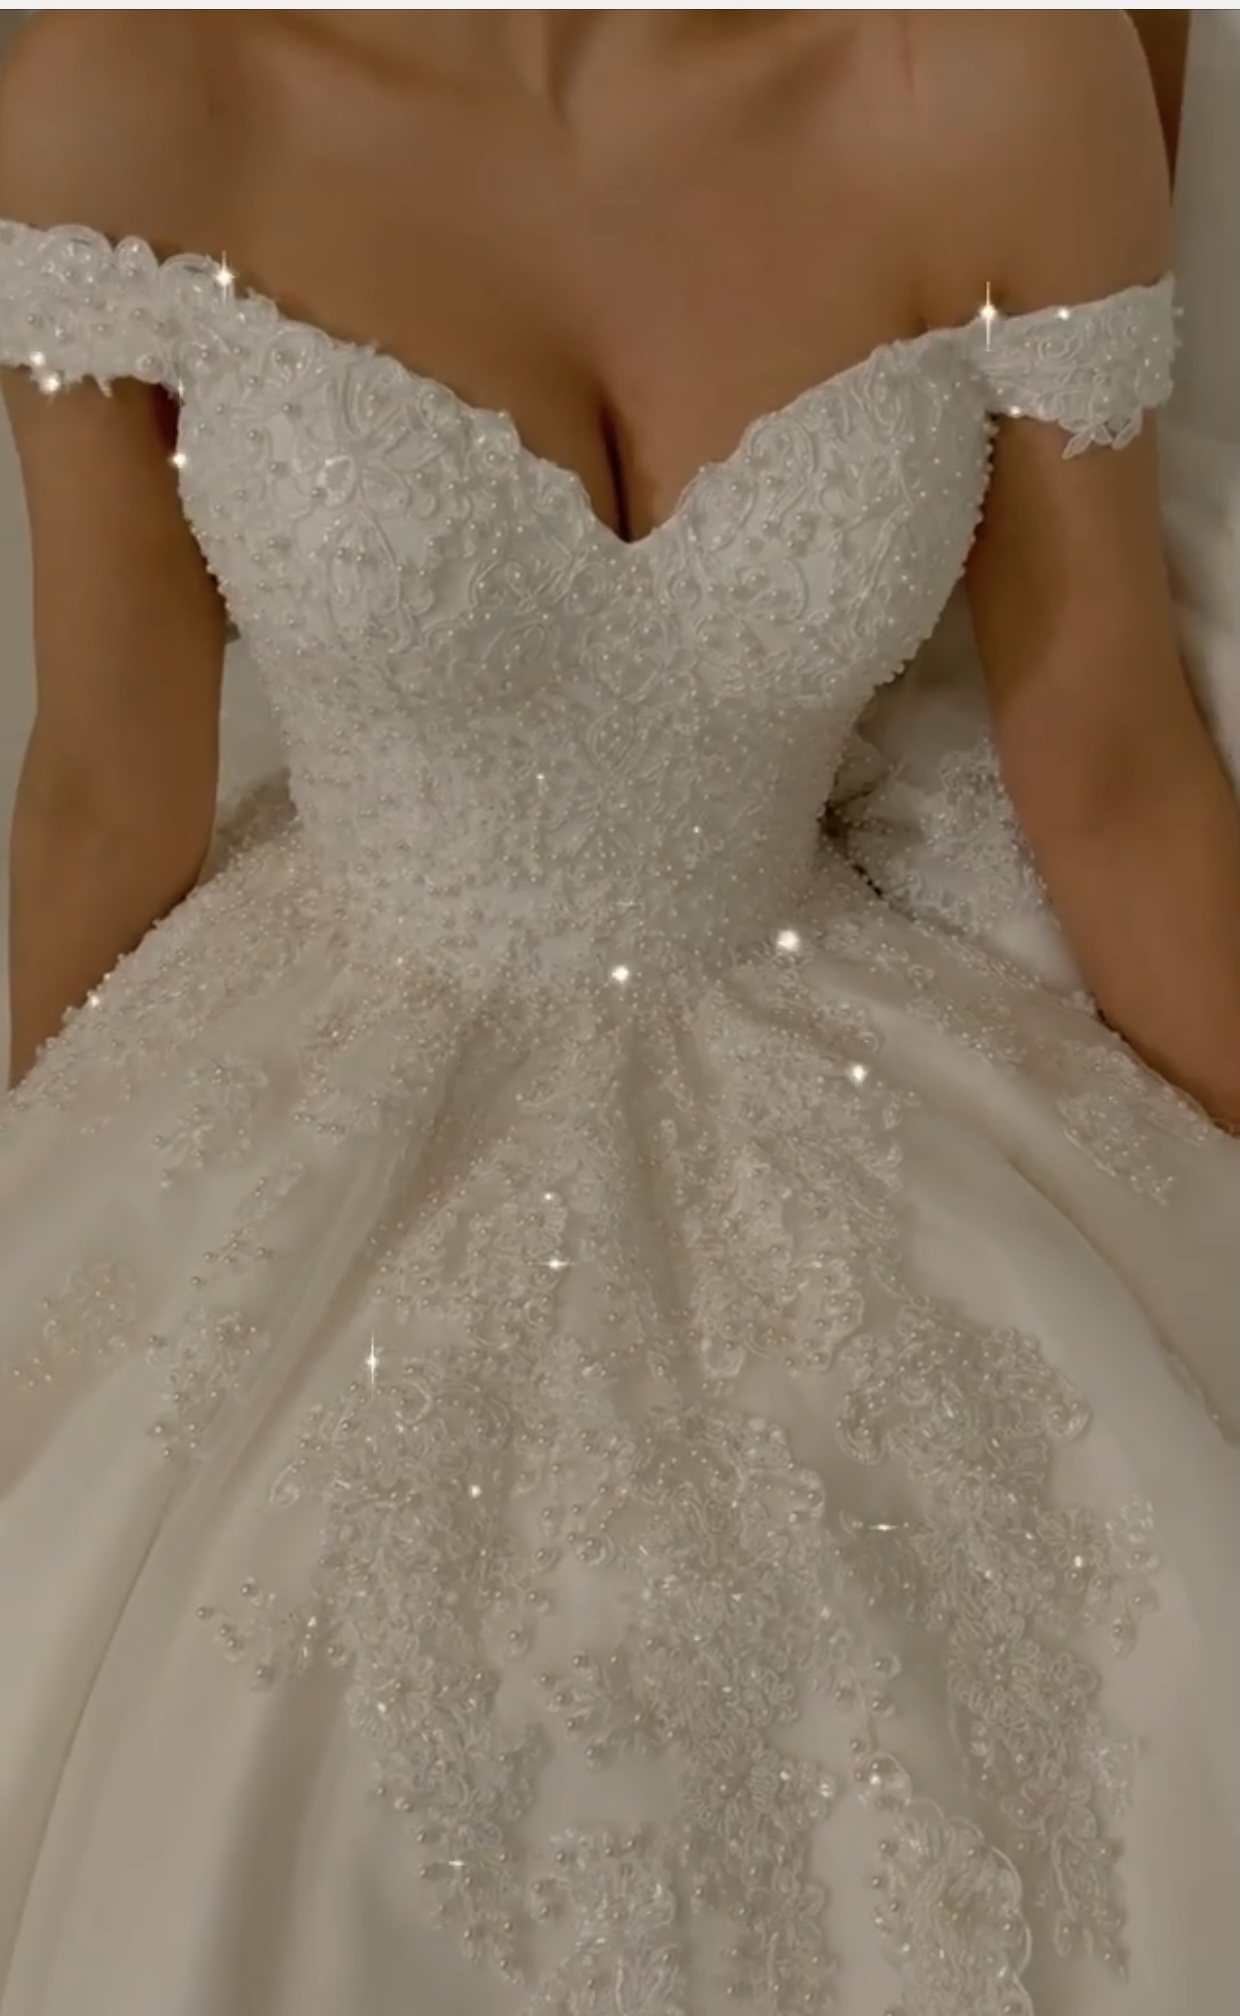 The Most Sparkly Wedding Dress Ever Slaylebrity